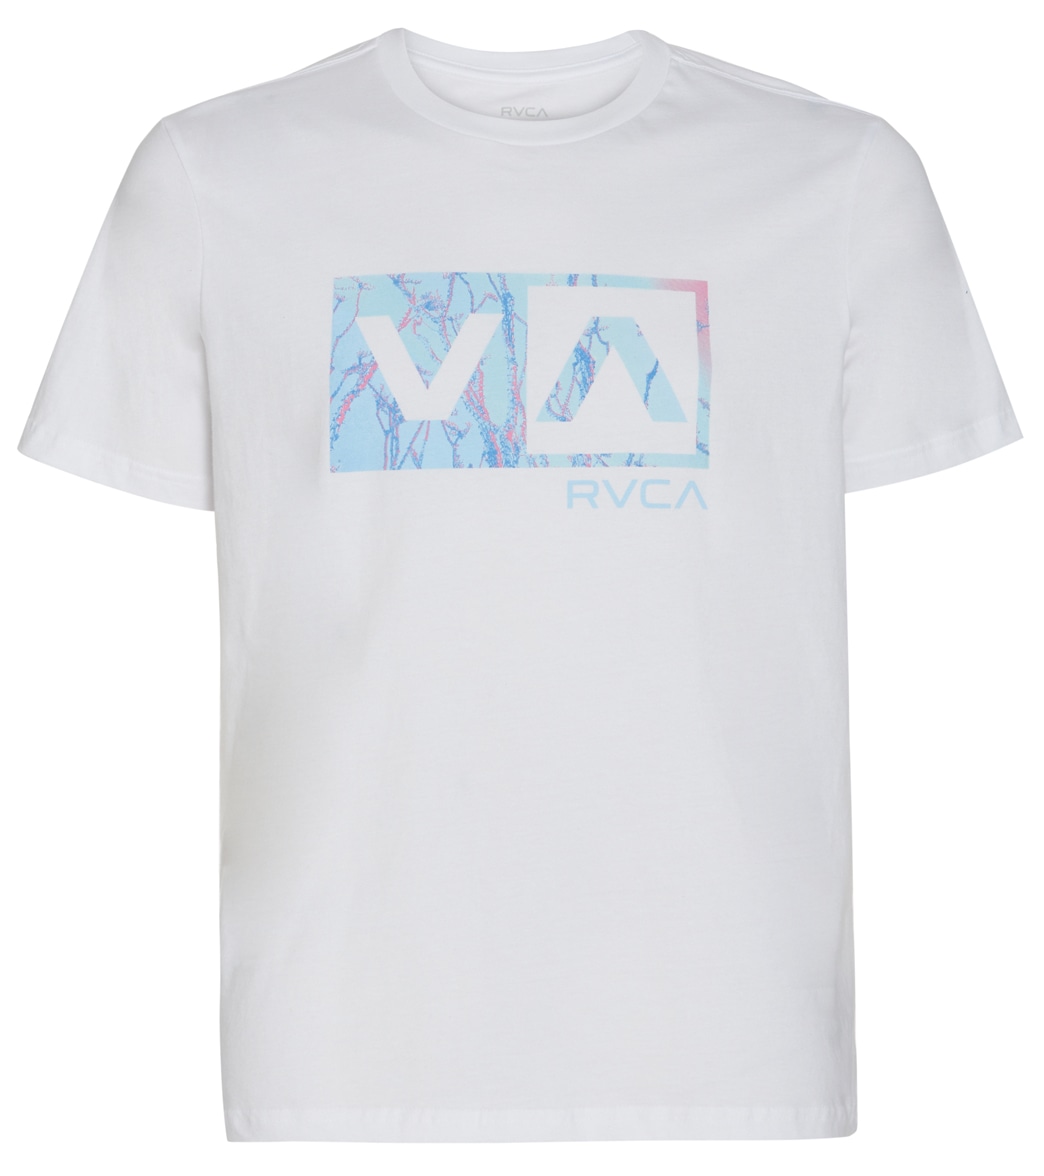 Rvca Men's Balance Box Short Sleeve Tee Shirt - White Large Cotton - Swimoutlet.com